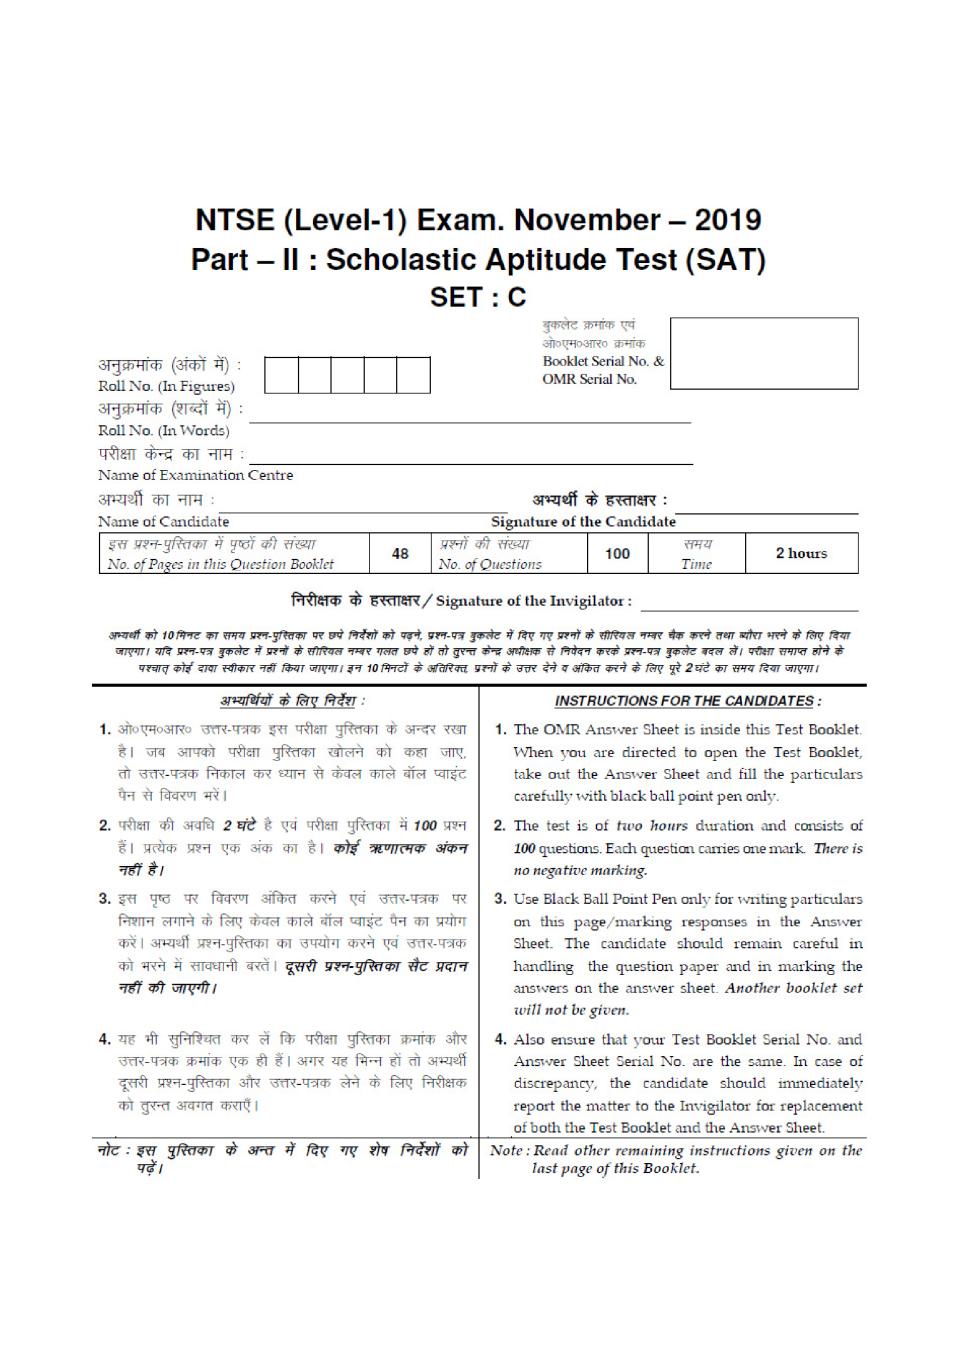 Haryana NTSE Nov 2019 SAT Question Paper Set C - Page 1